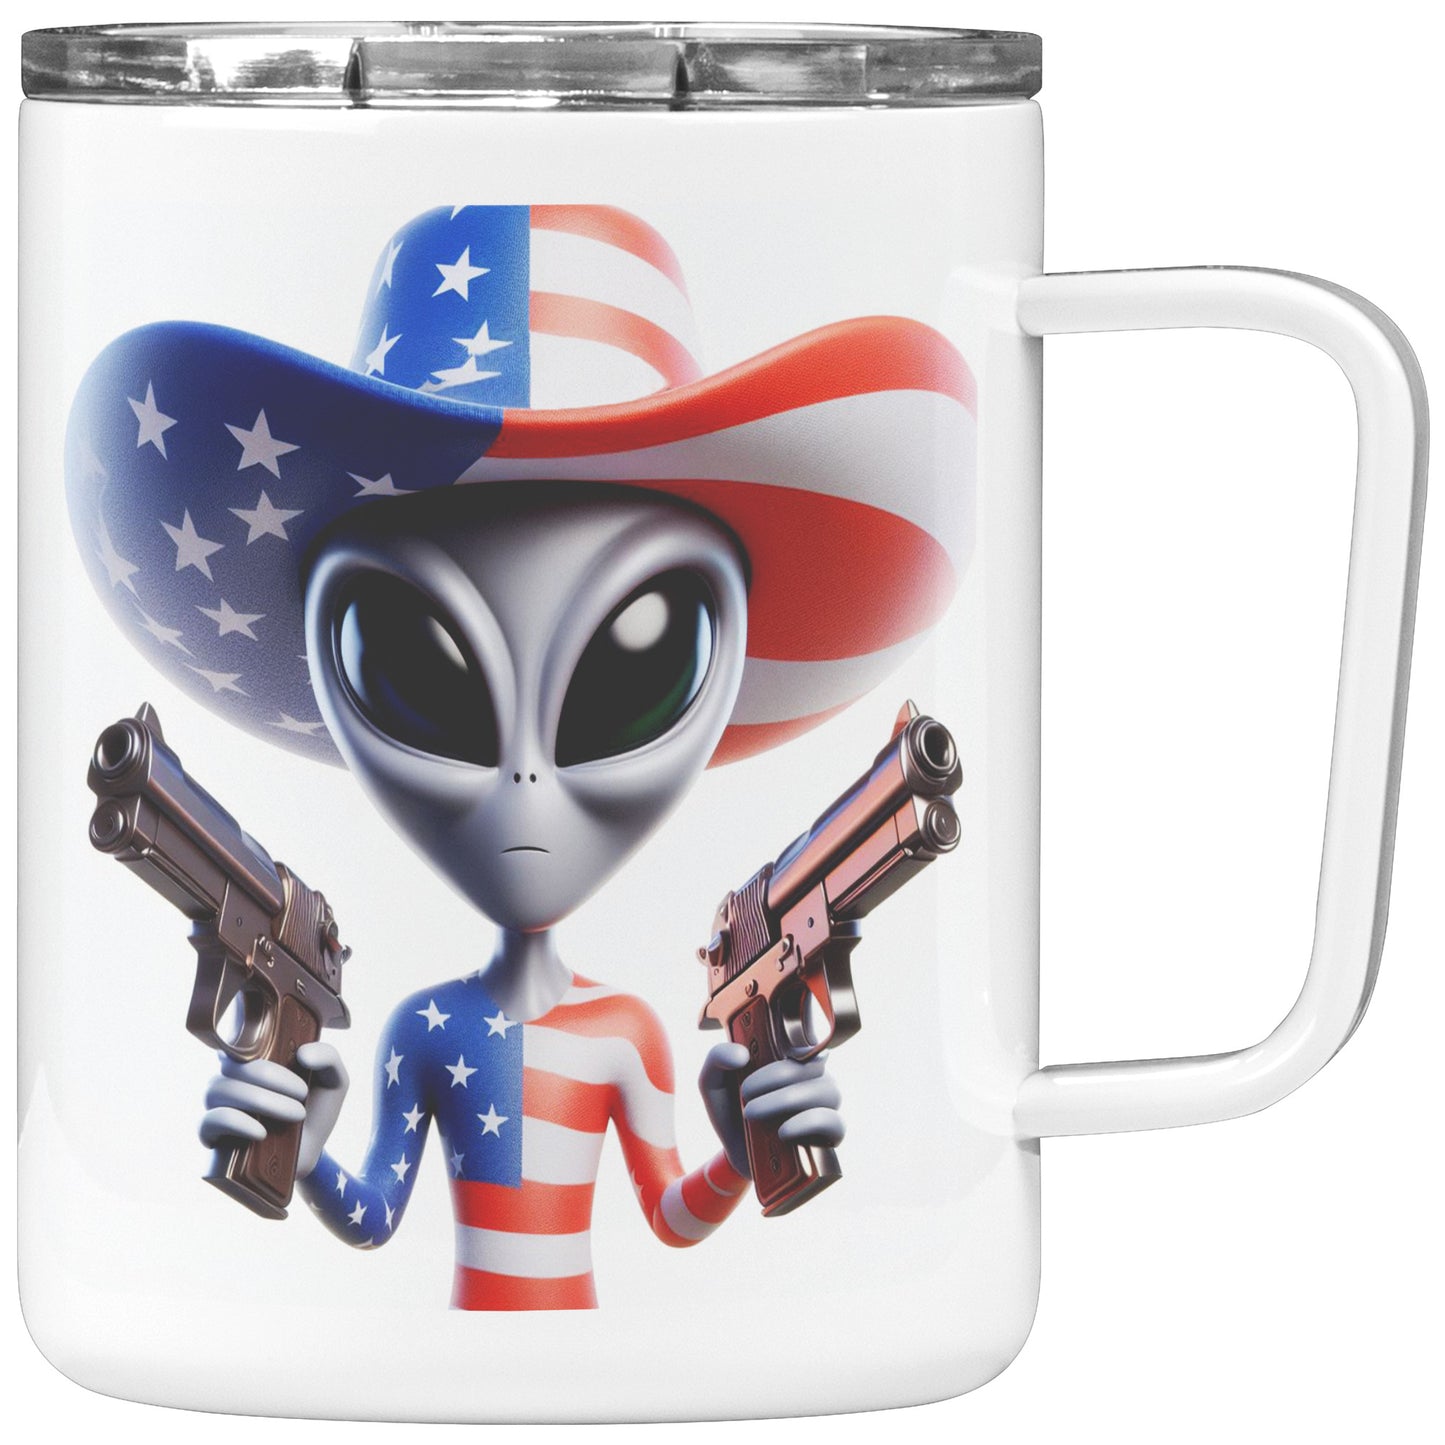 Nebulon the Grey Alien - Insulated Coffee Mug #8